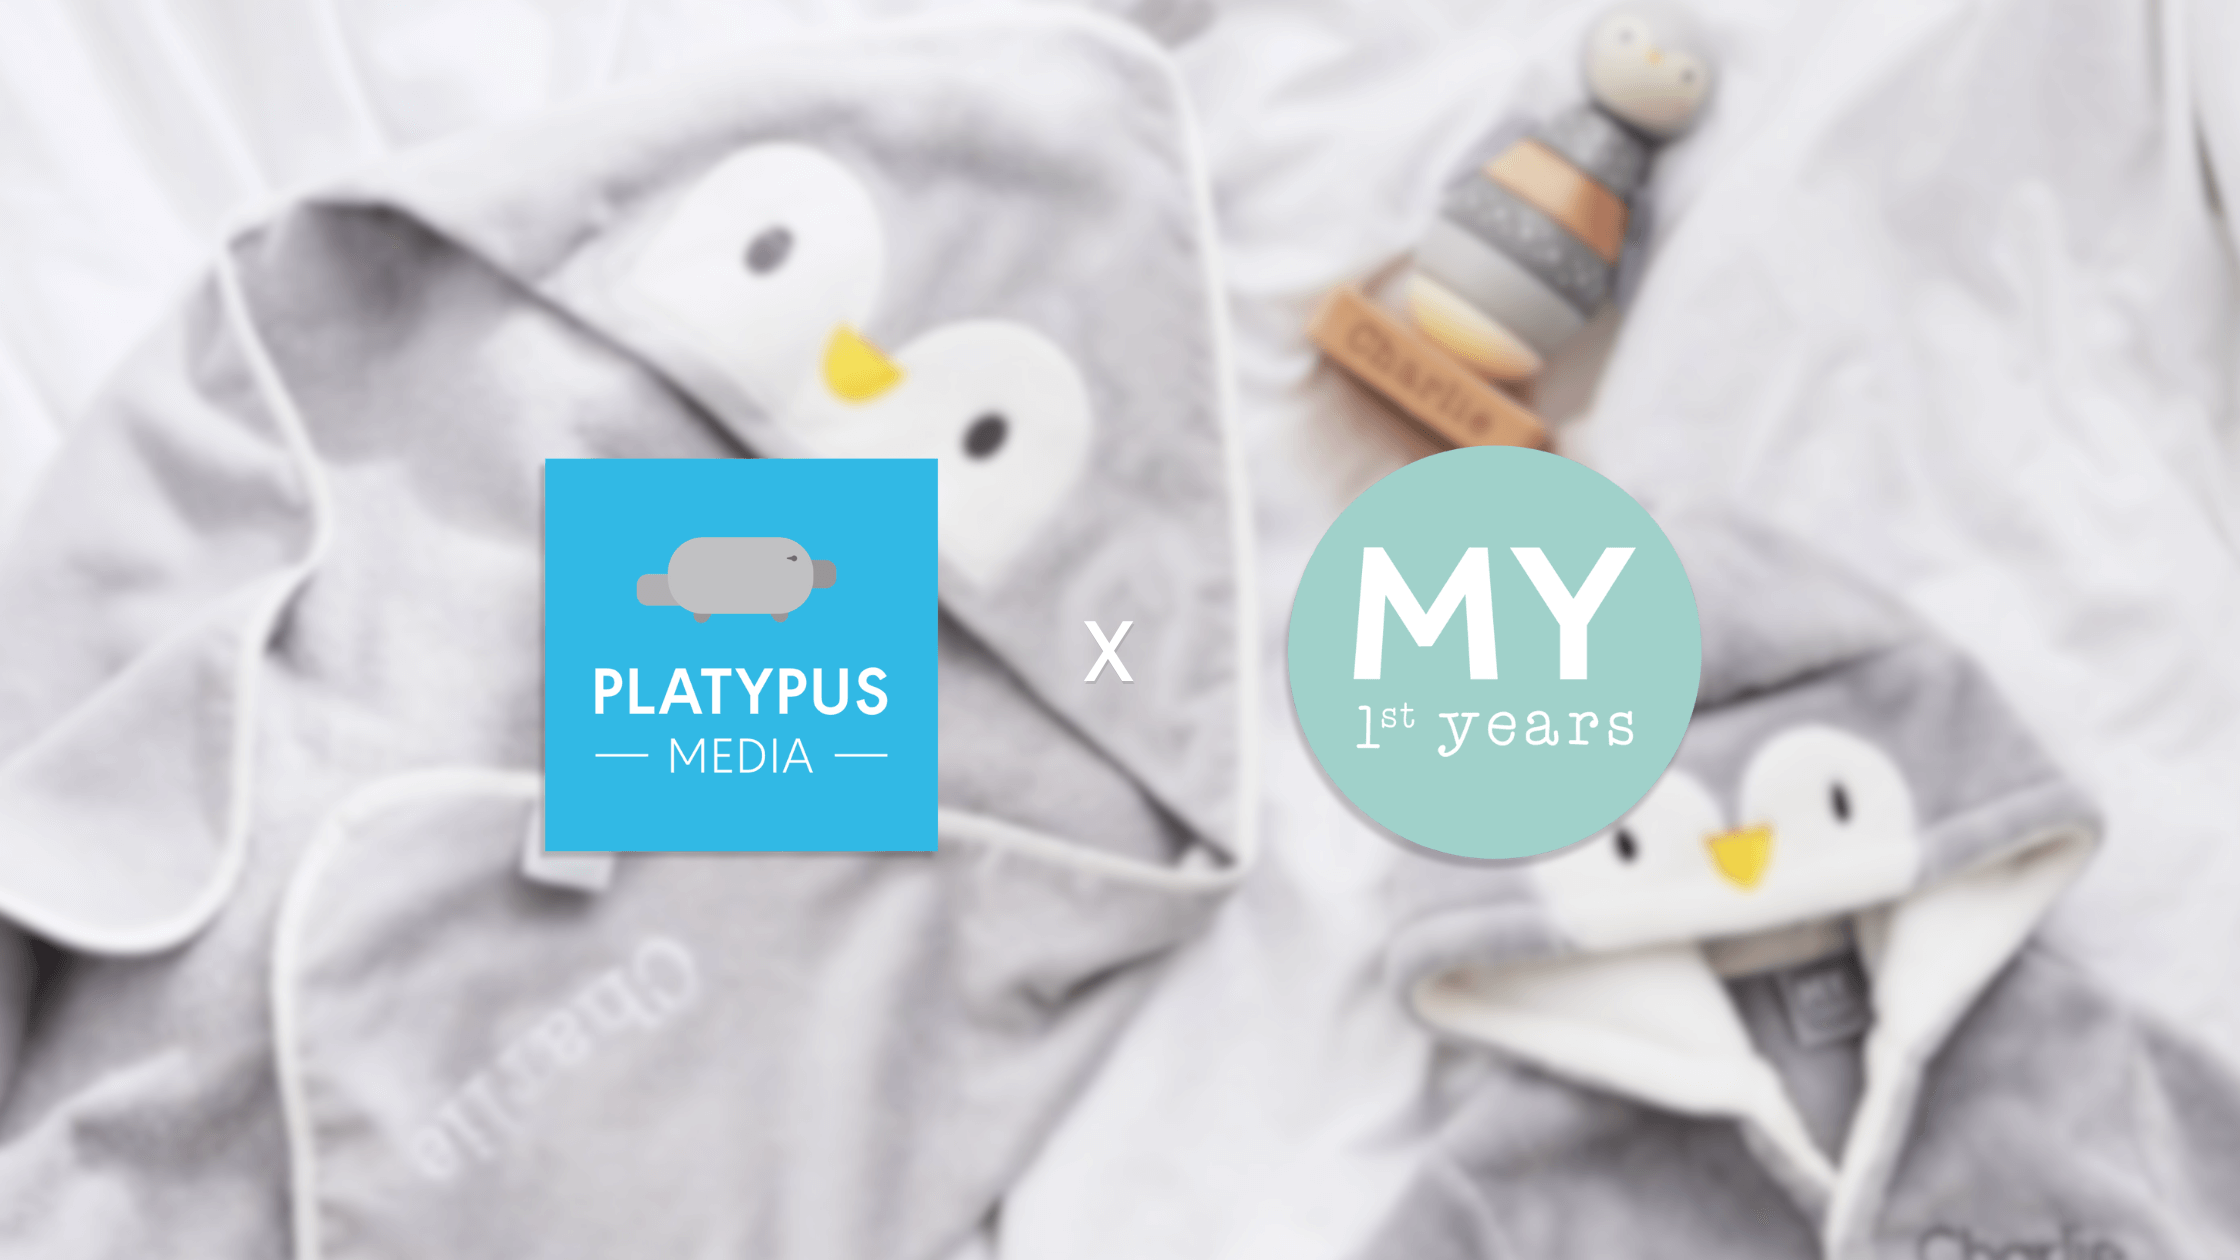 Platypus Media x My 1st Years - Facebook Ads Case Study - Facebook Ads Agency Gateshead